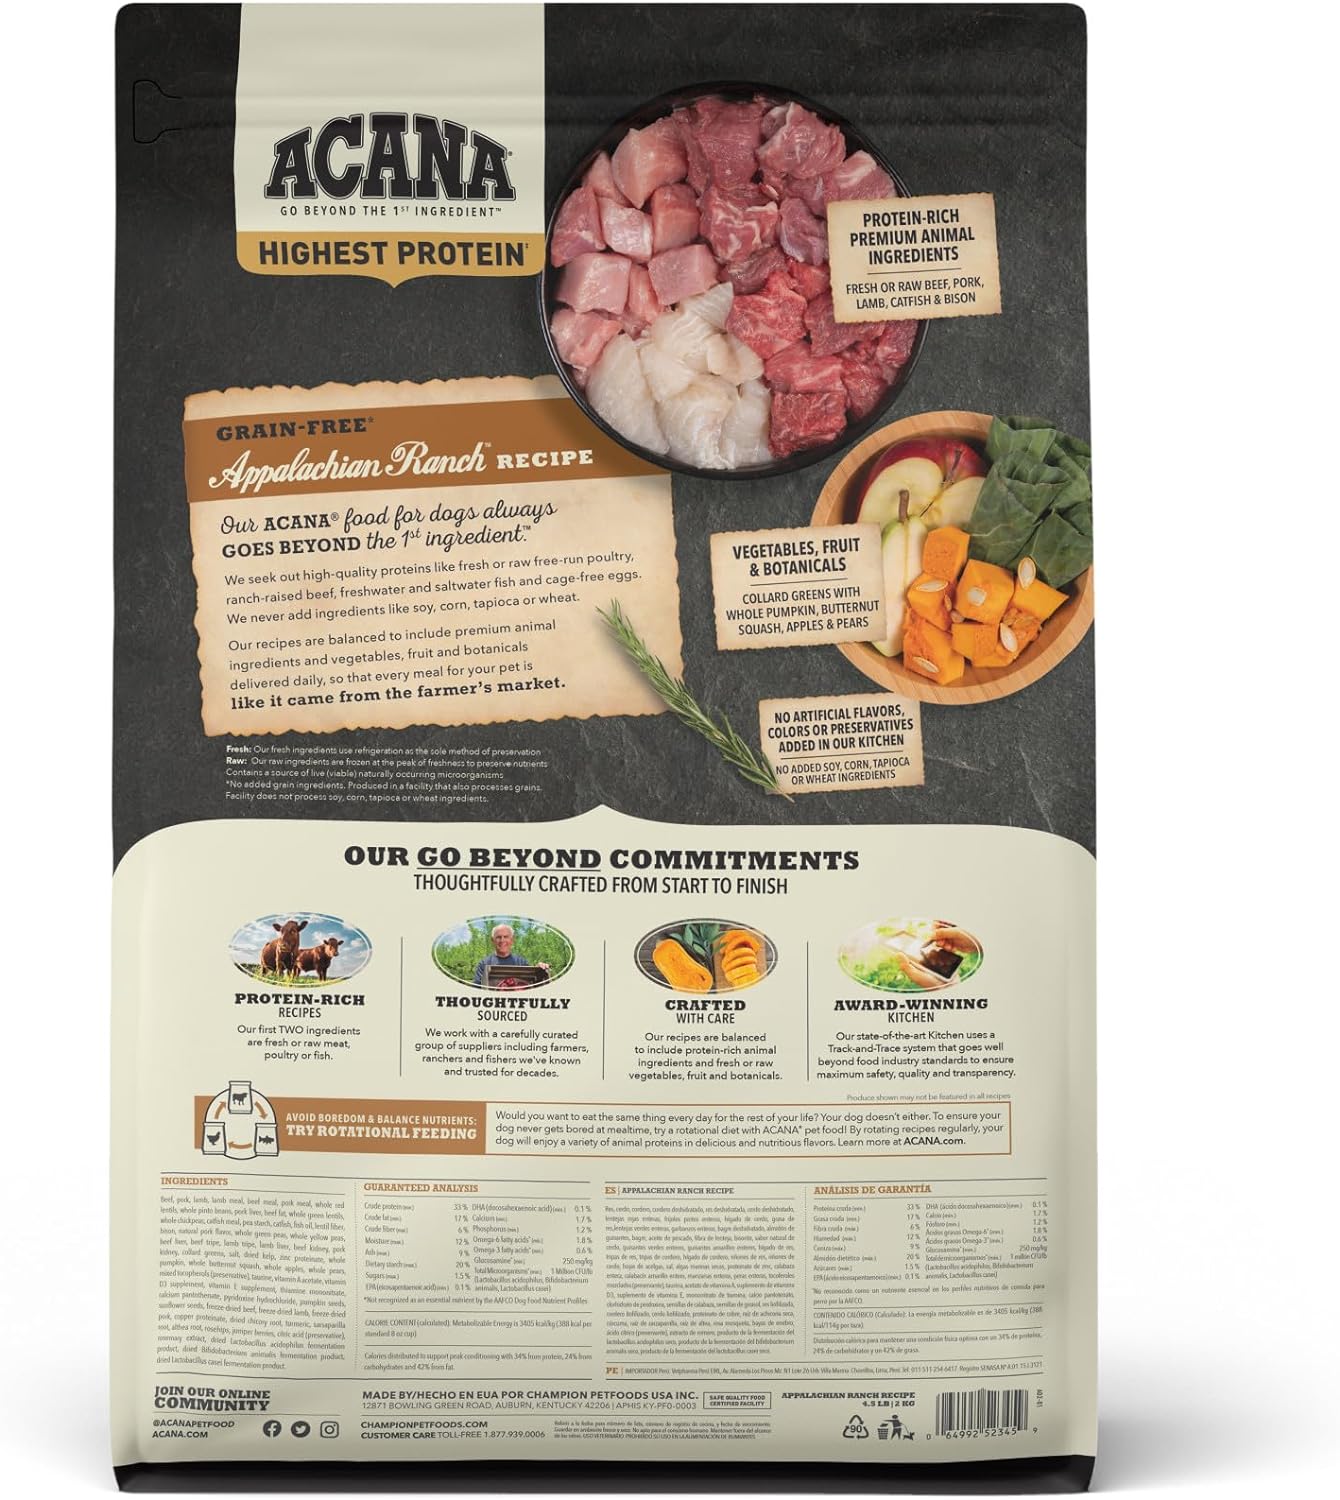 Acana Highest Protein Appalachian Ranch Recipe Dry Dog Food – Gallery Image 2